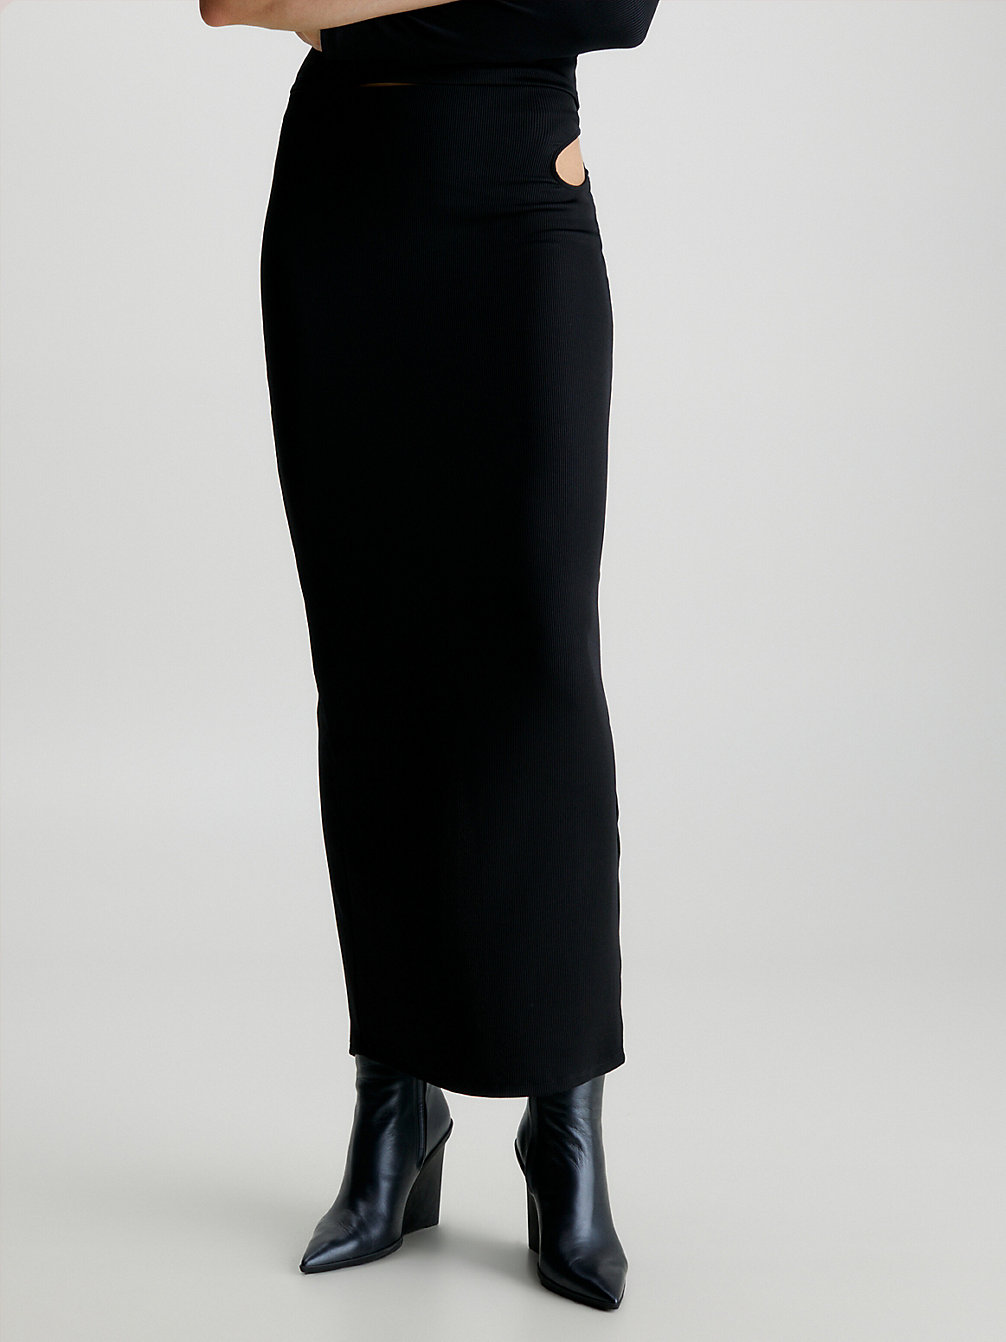 CK BLACK Slim Cut Out Detail Skirt undefined women Calvin Klein